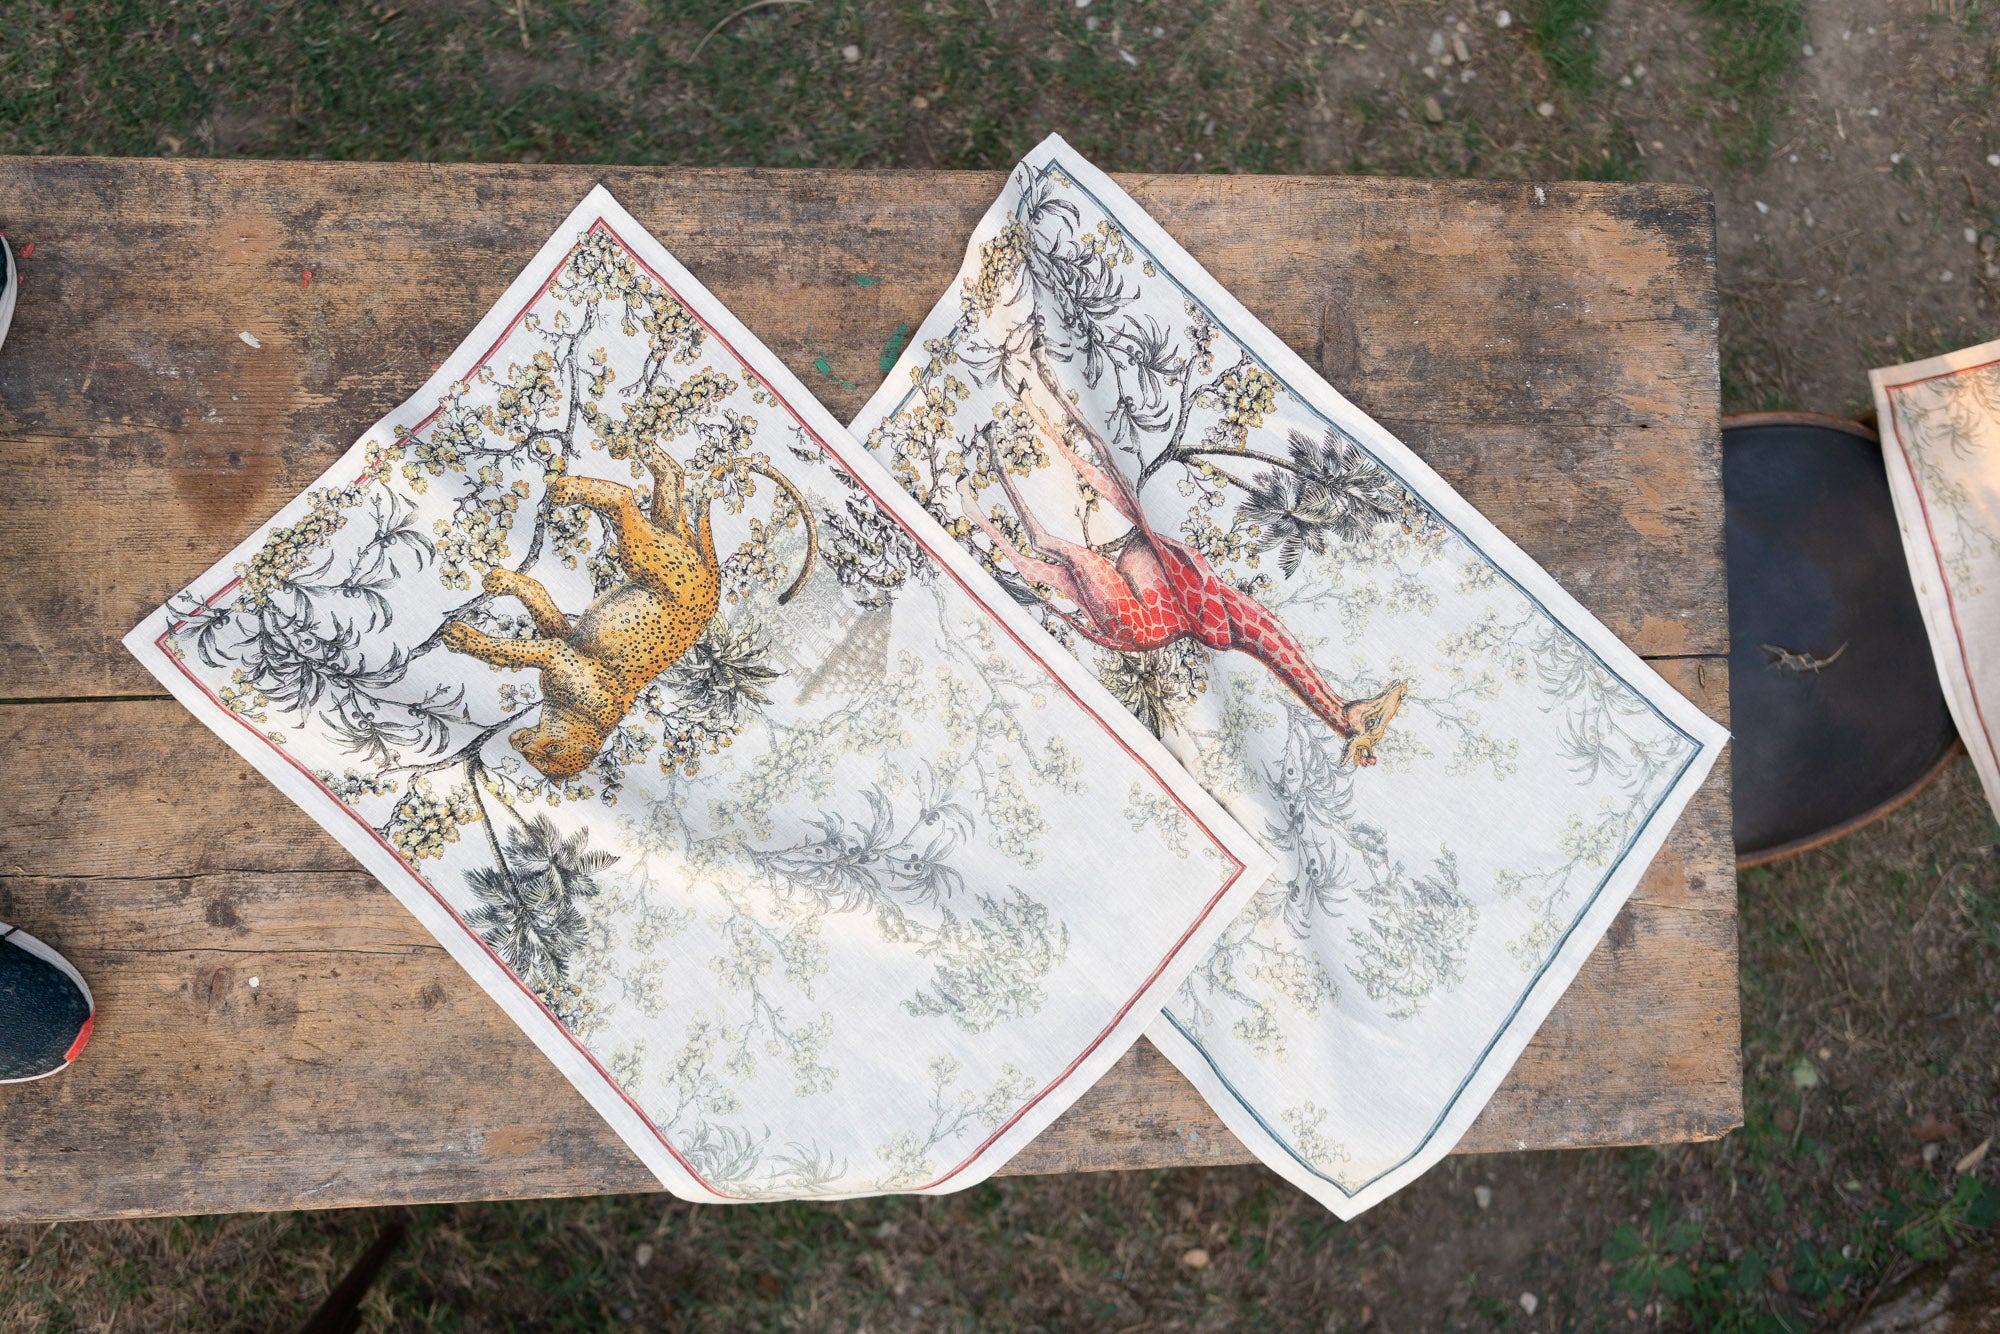 Tessitura Toscana Telerie, “Savana - Giraffa”, Pure linen printed tea towel.